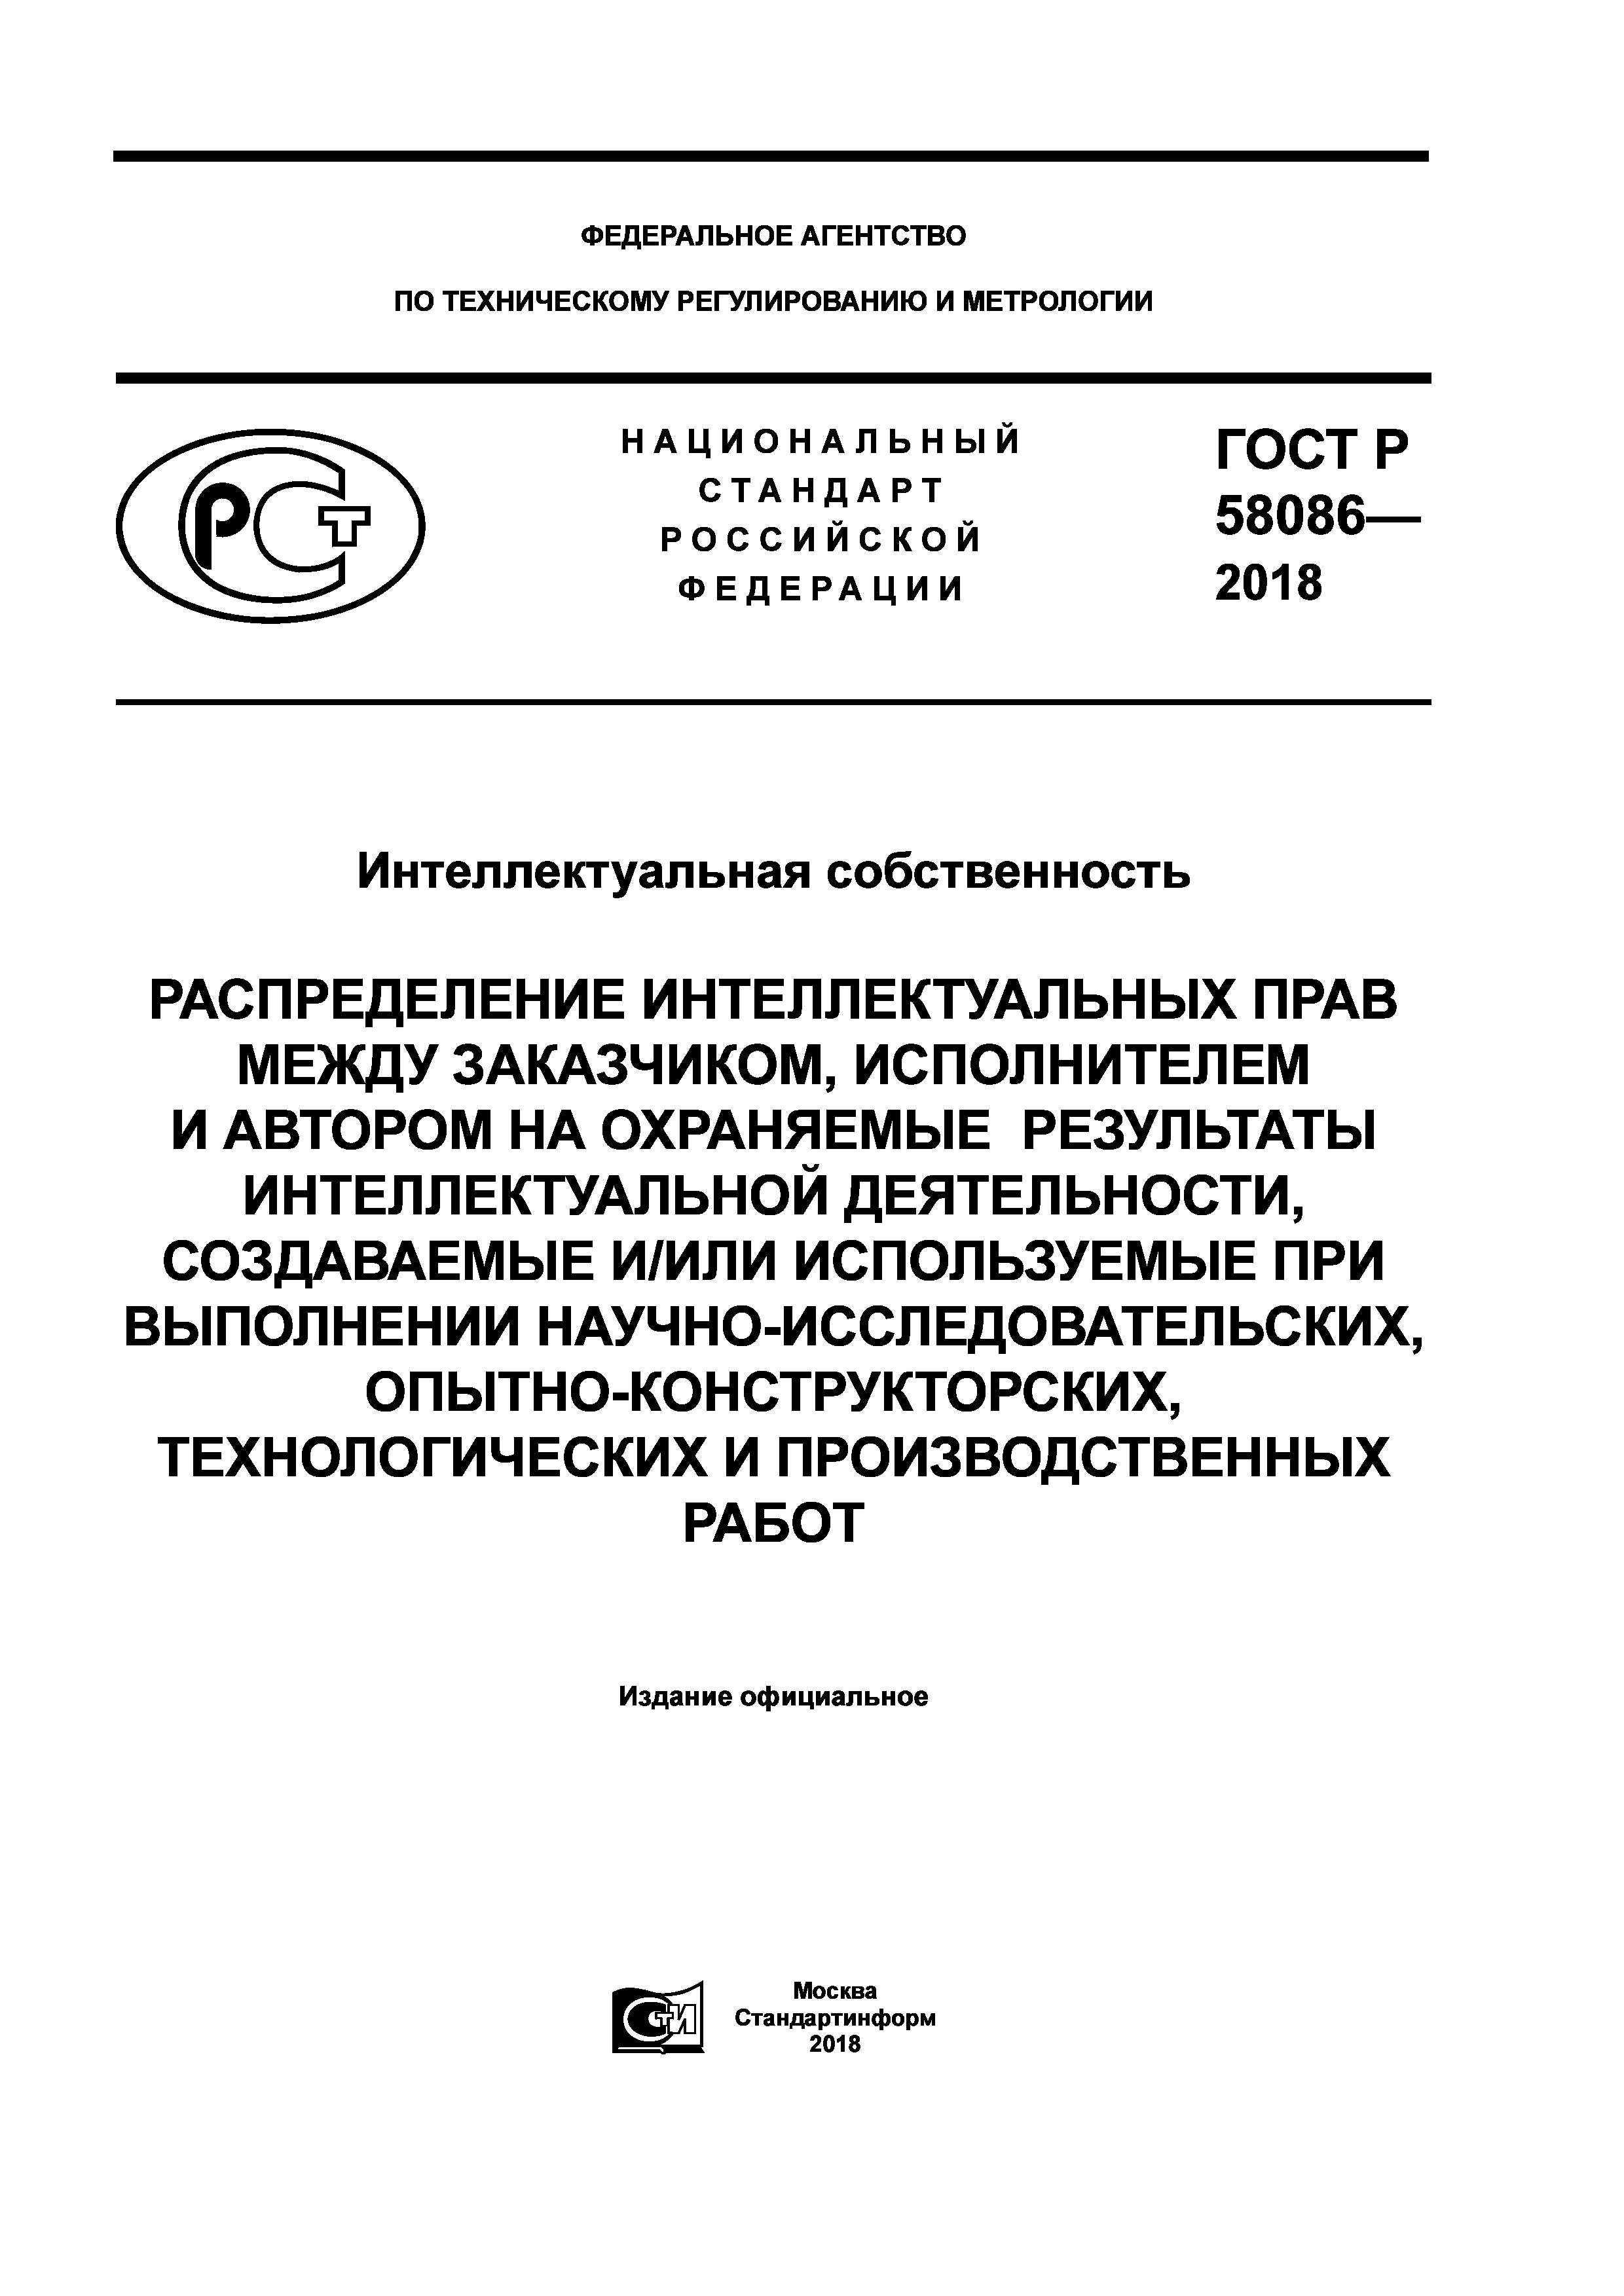 ГОСТ Р 58086-2018